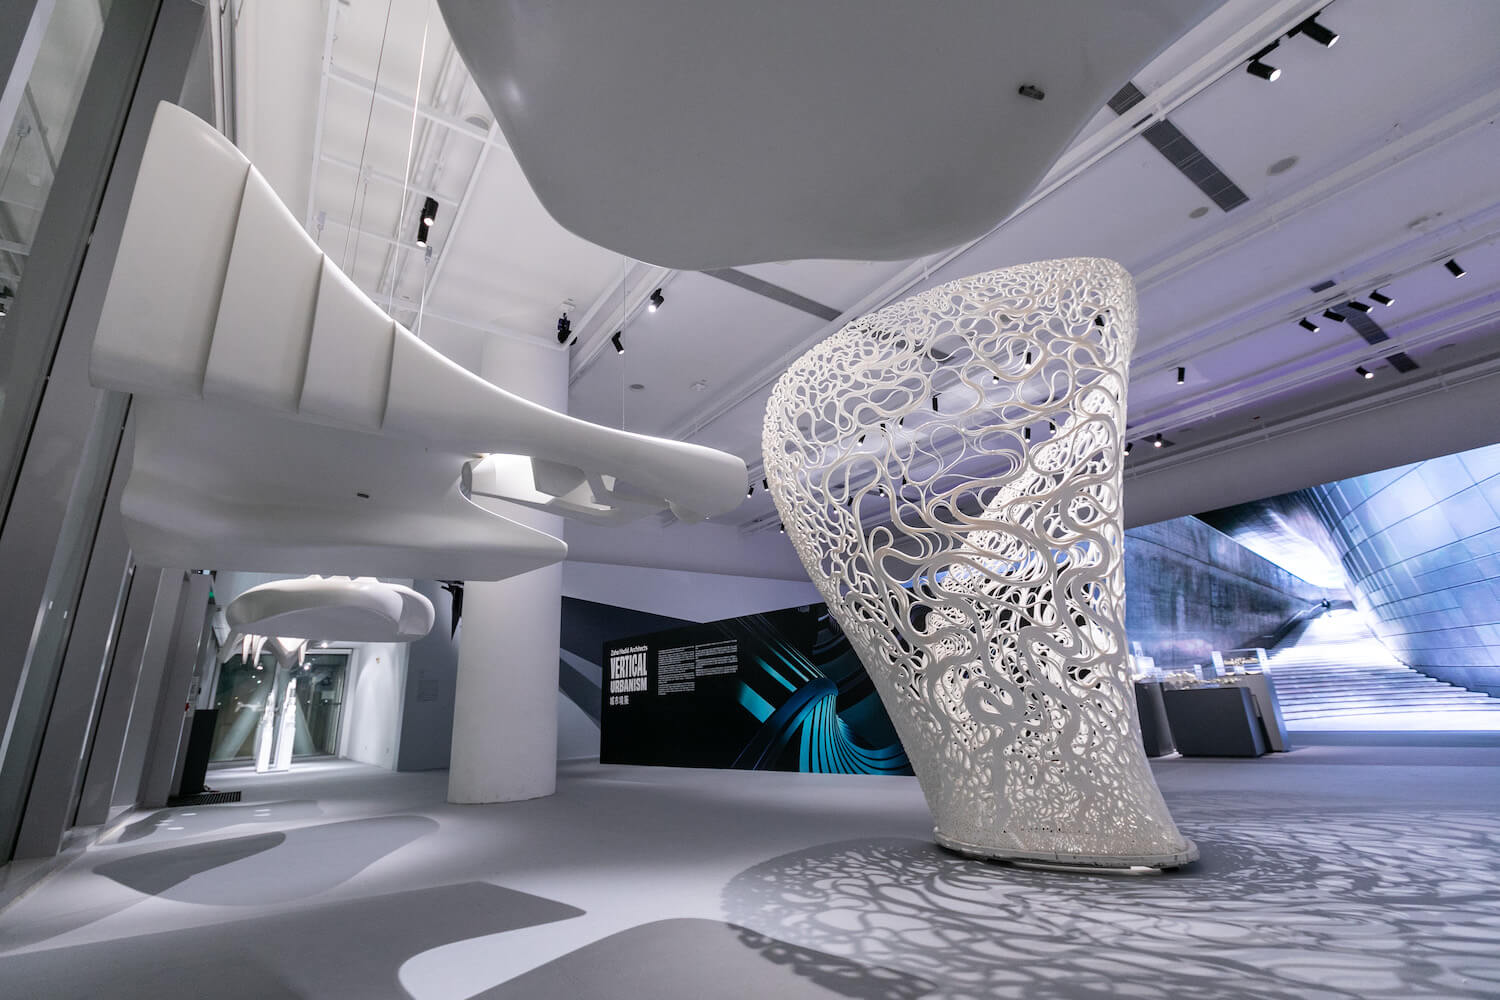 Zaha Hadid Architects’ Vertical UrbanismNews